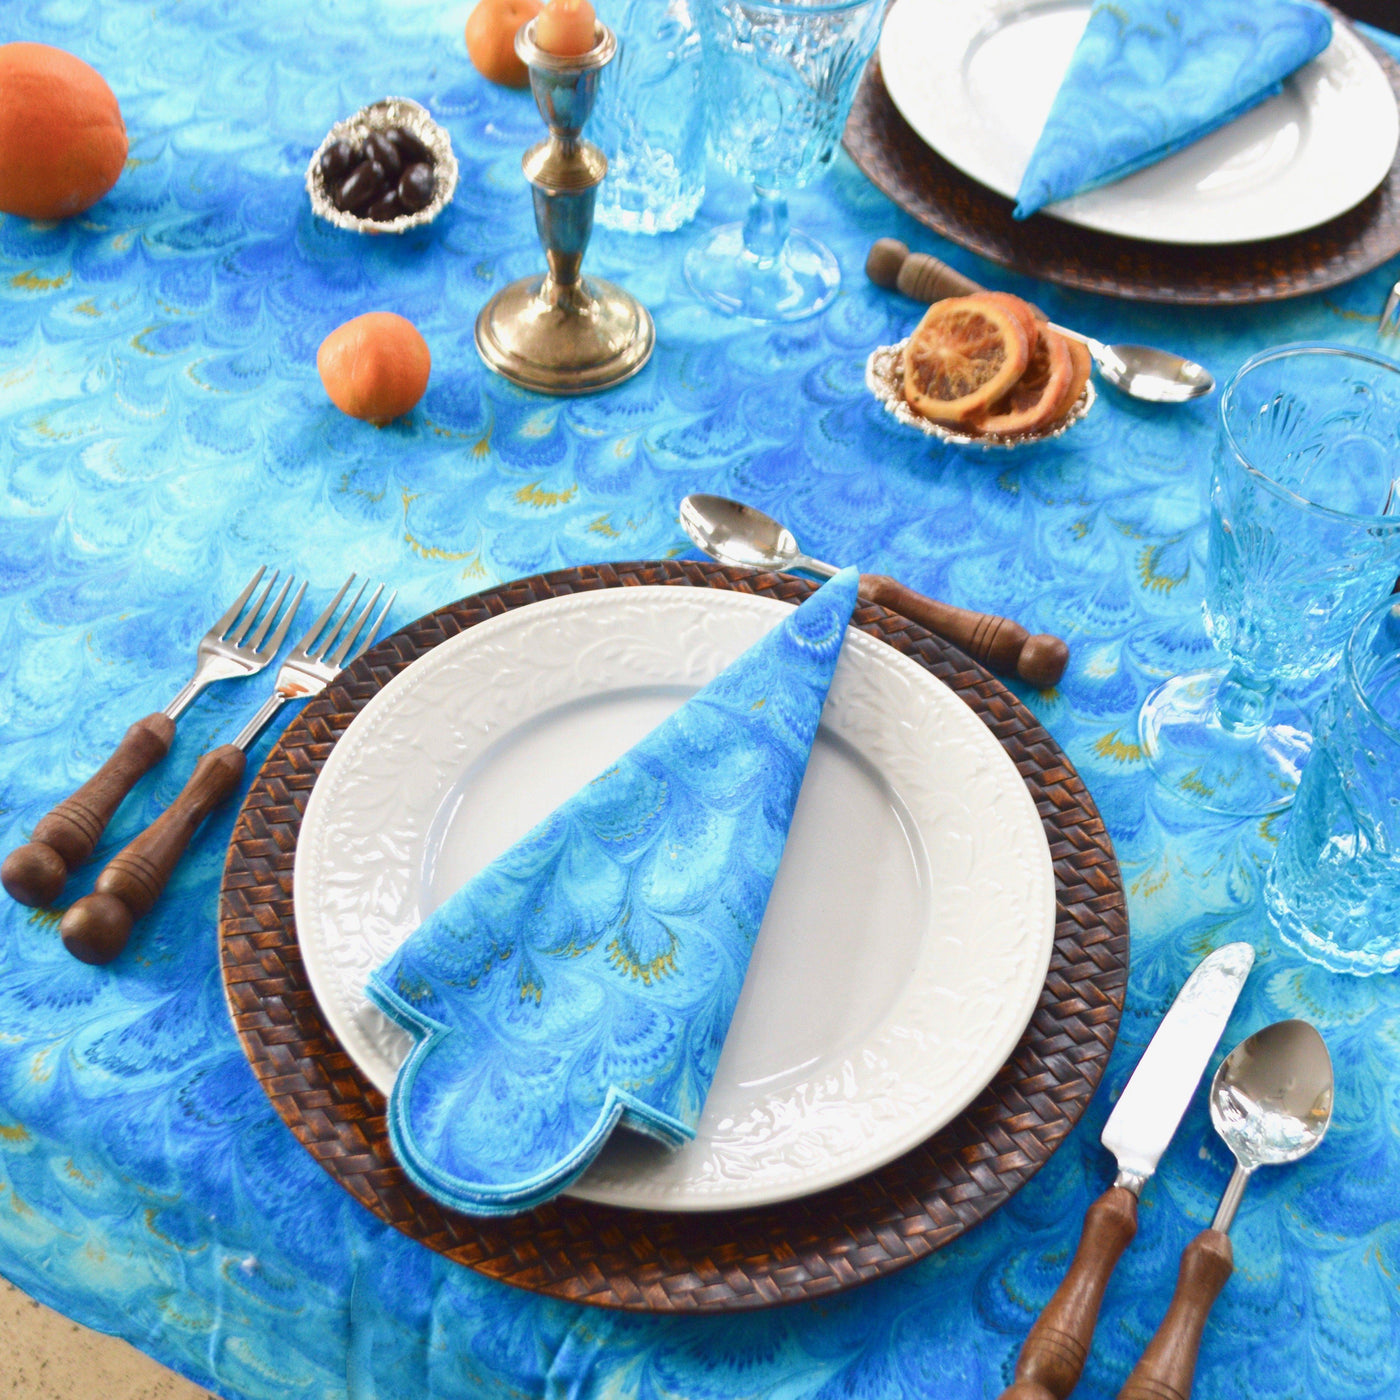 Blue Marble Tablecloth Chefanie 